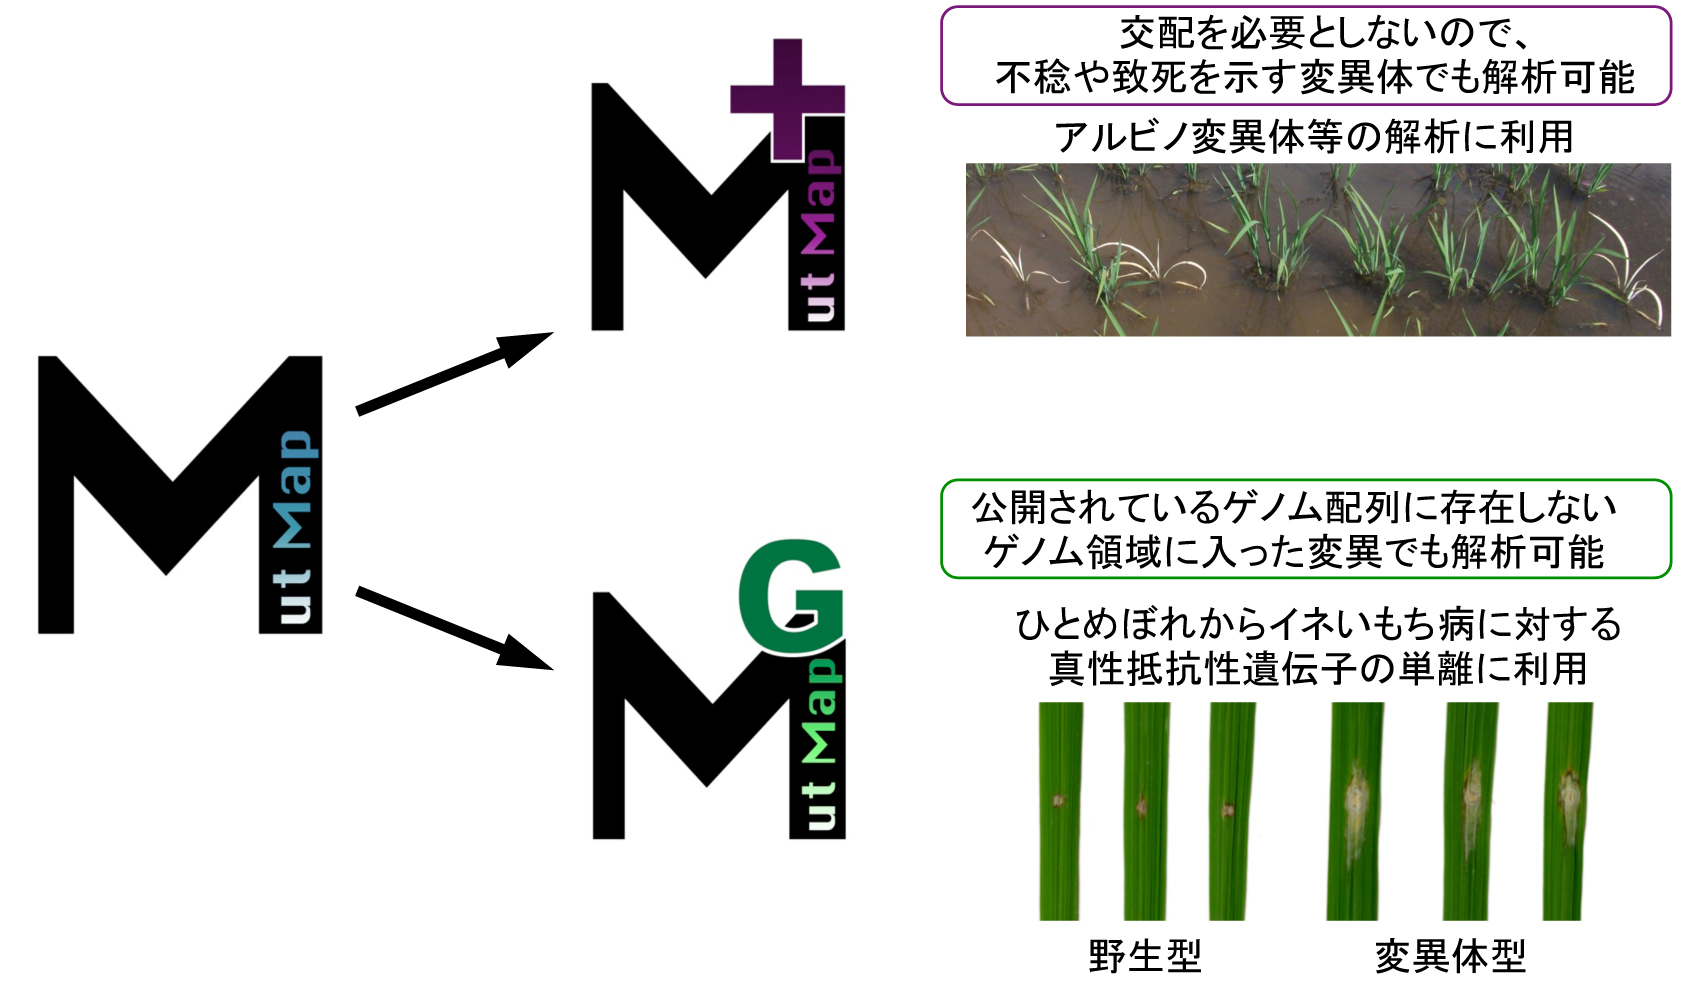 http://www.ige.tohoku.ac.jp/prg/genetics/study_report/upload_items/201307/MutMap_fig.jpg